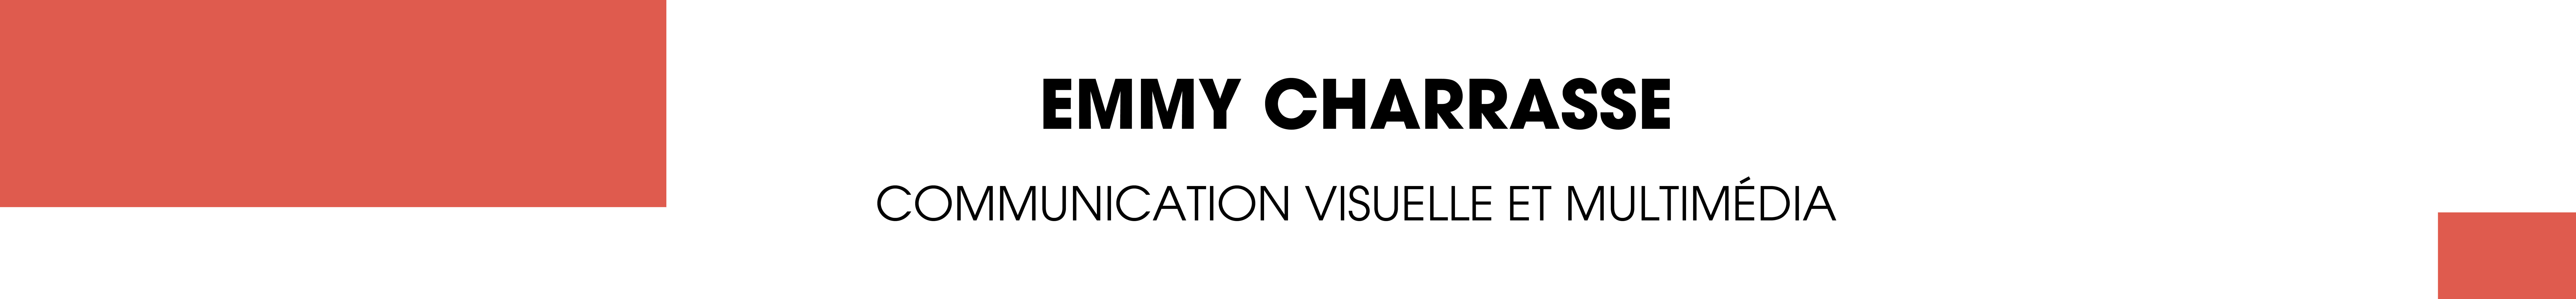 Emmy Charrasse's profile banner